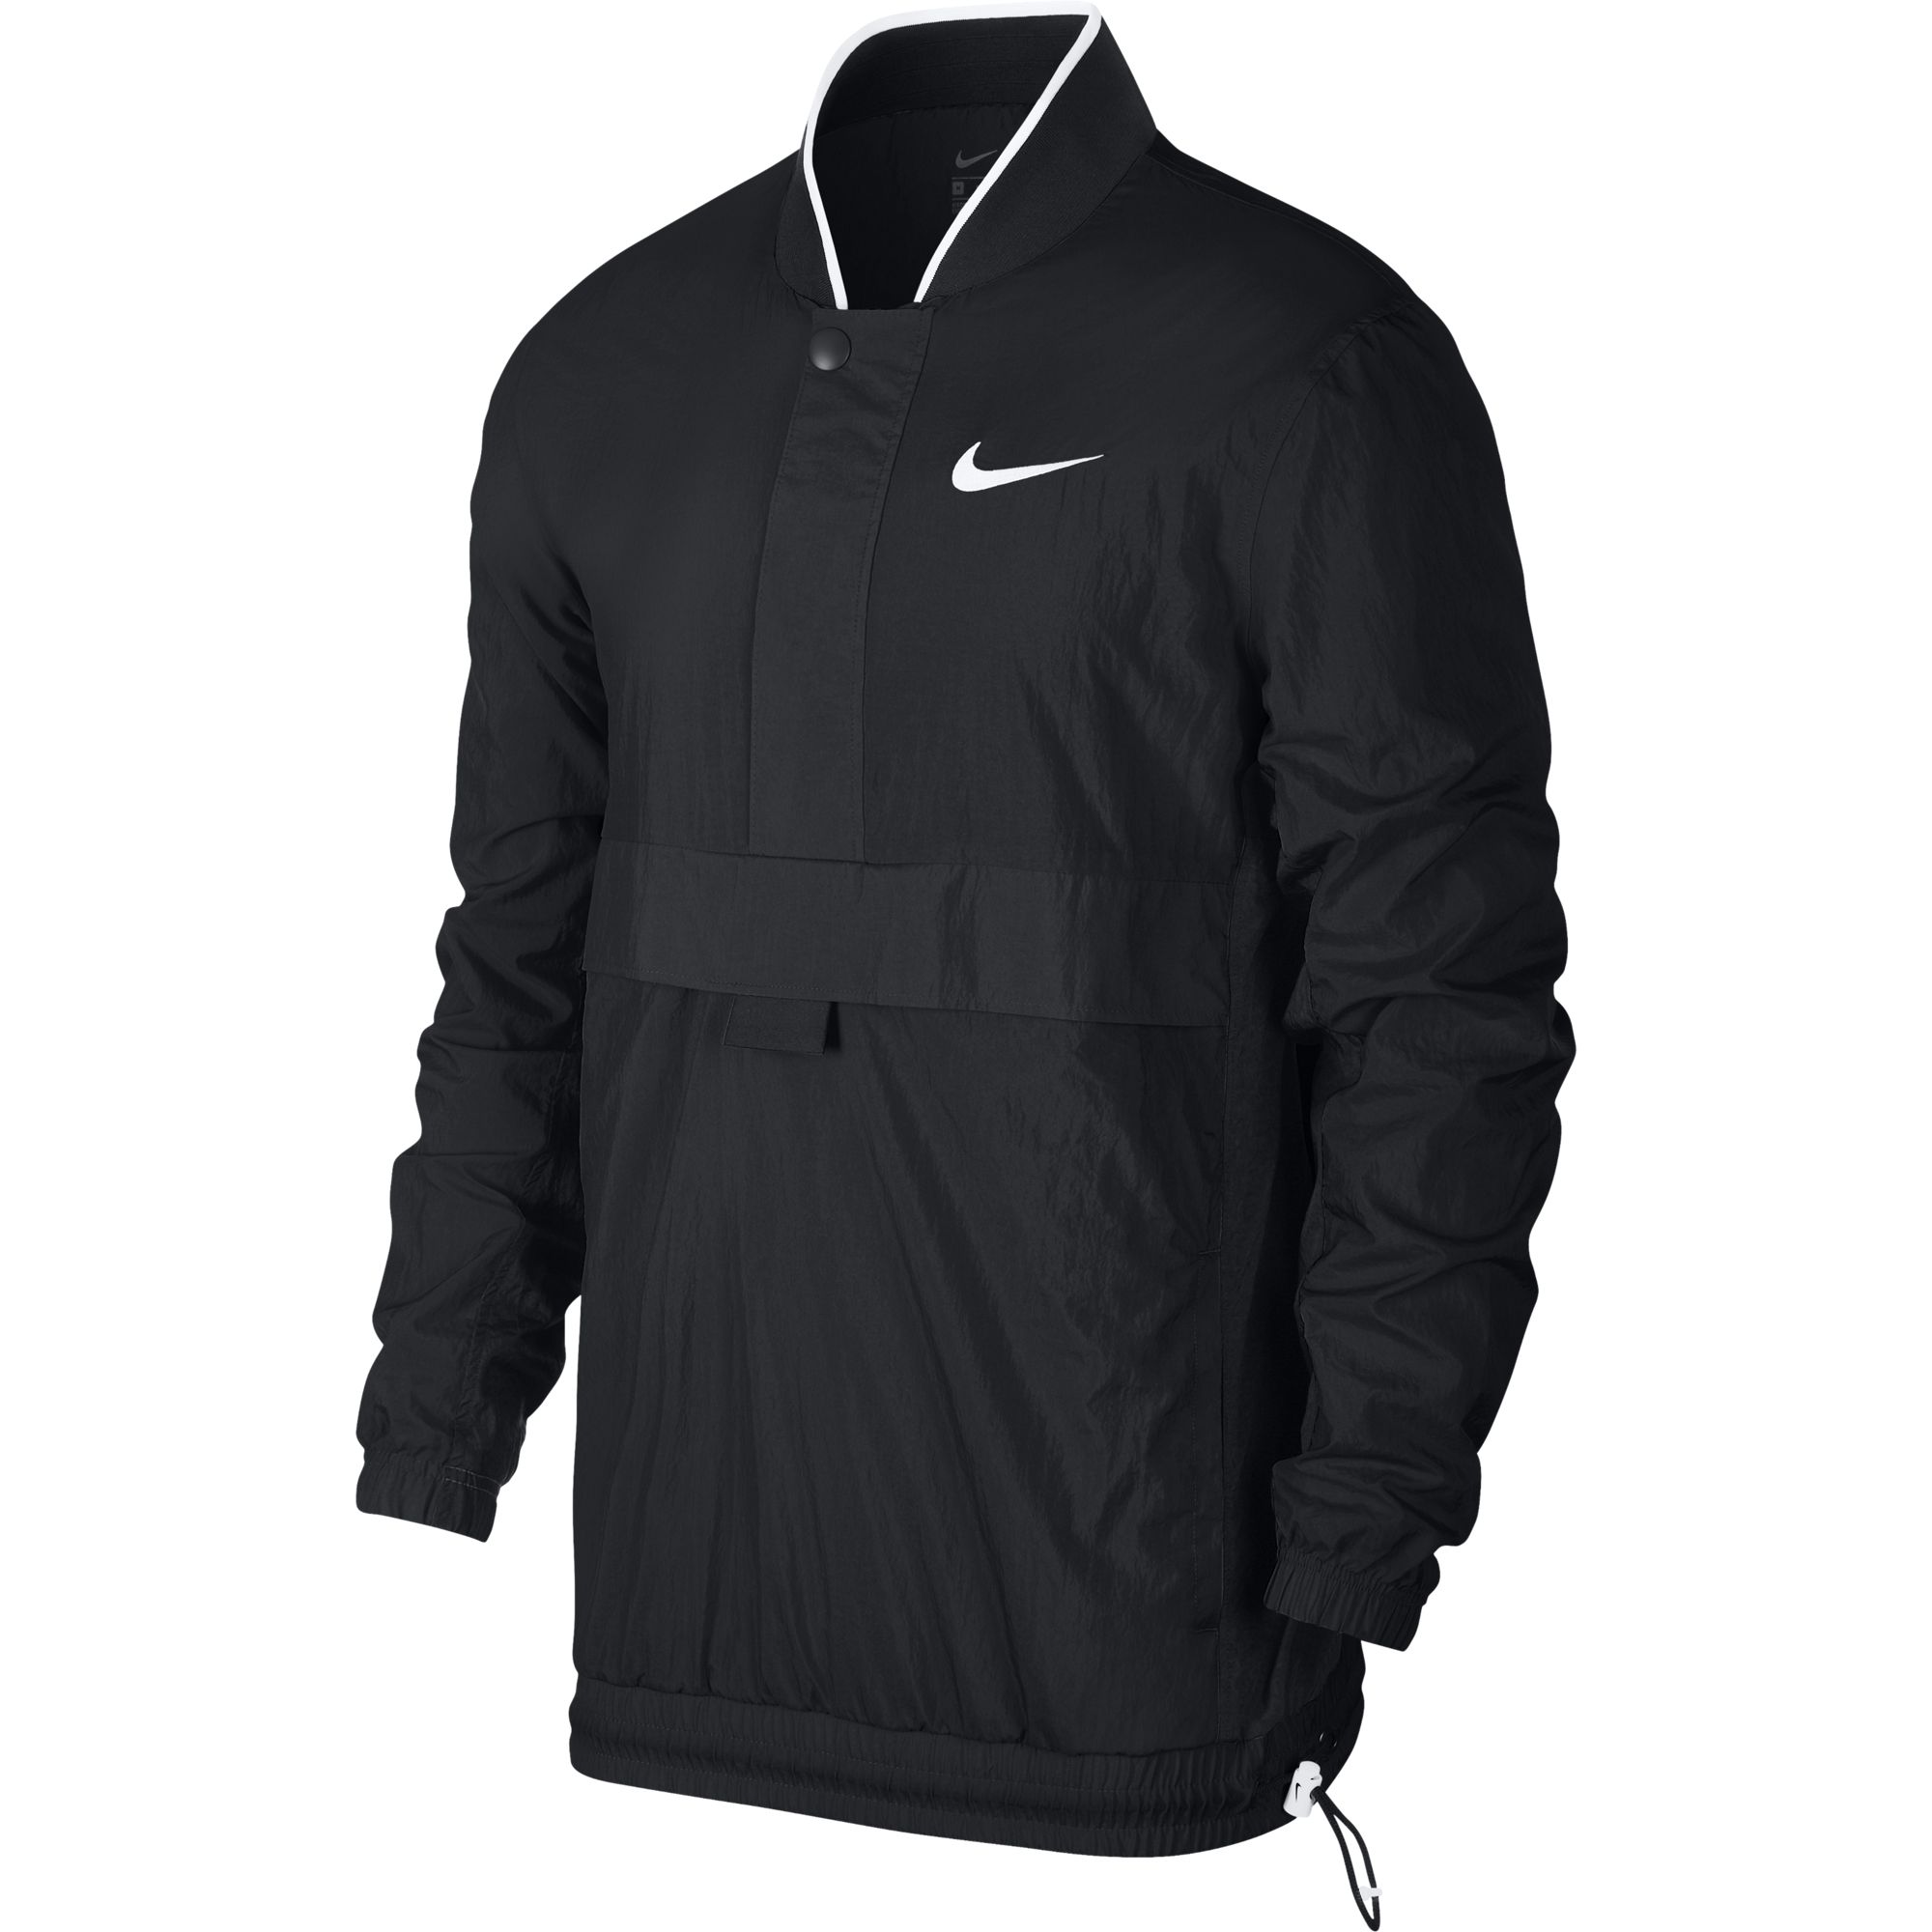 Баскетбольная куртка Nike Men's Basketball Jacket - картинка